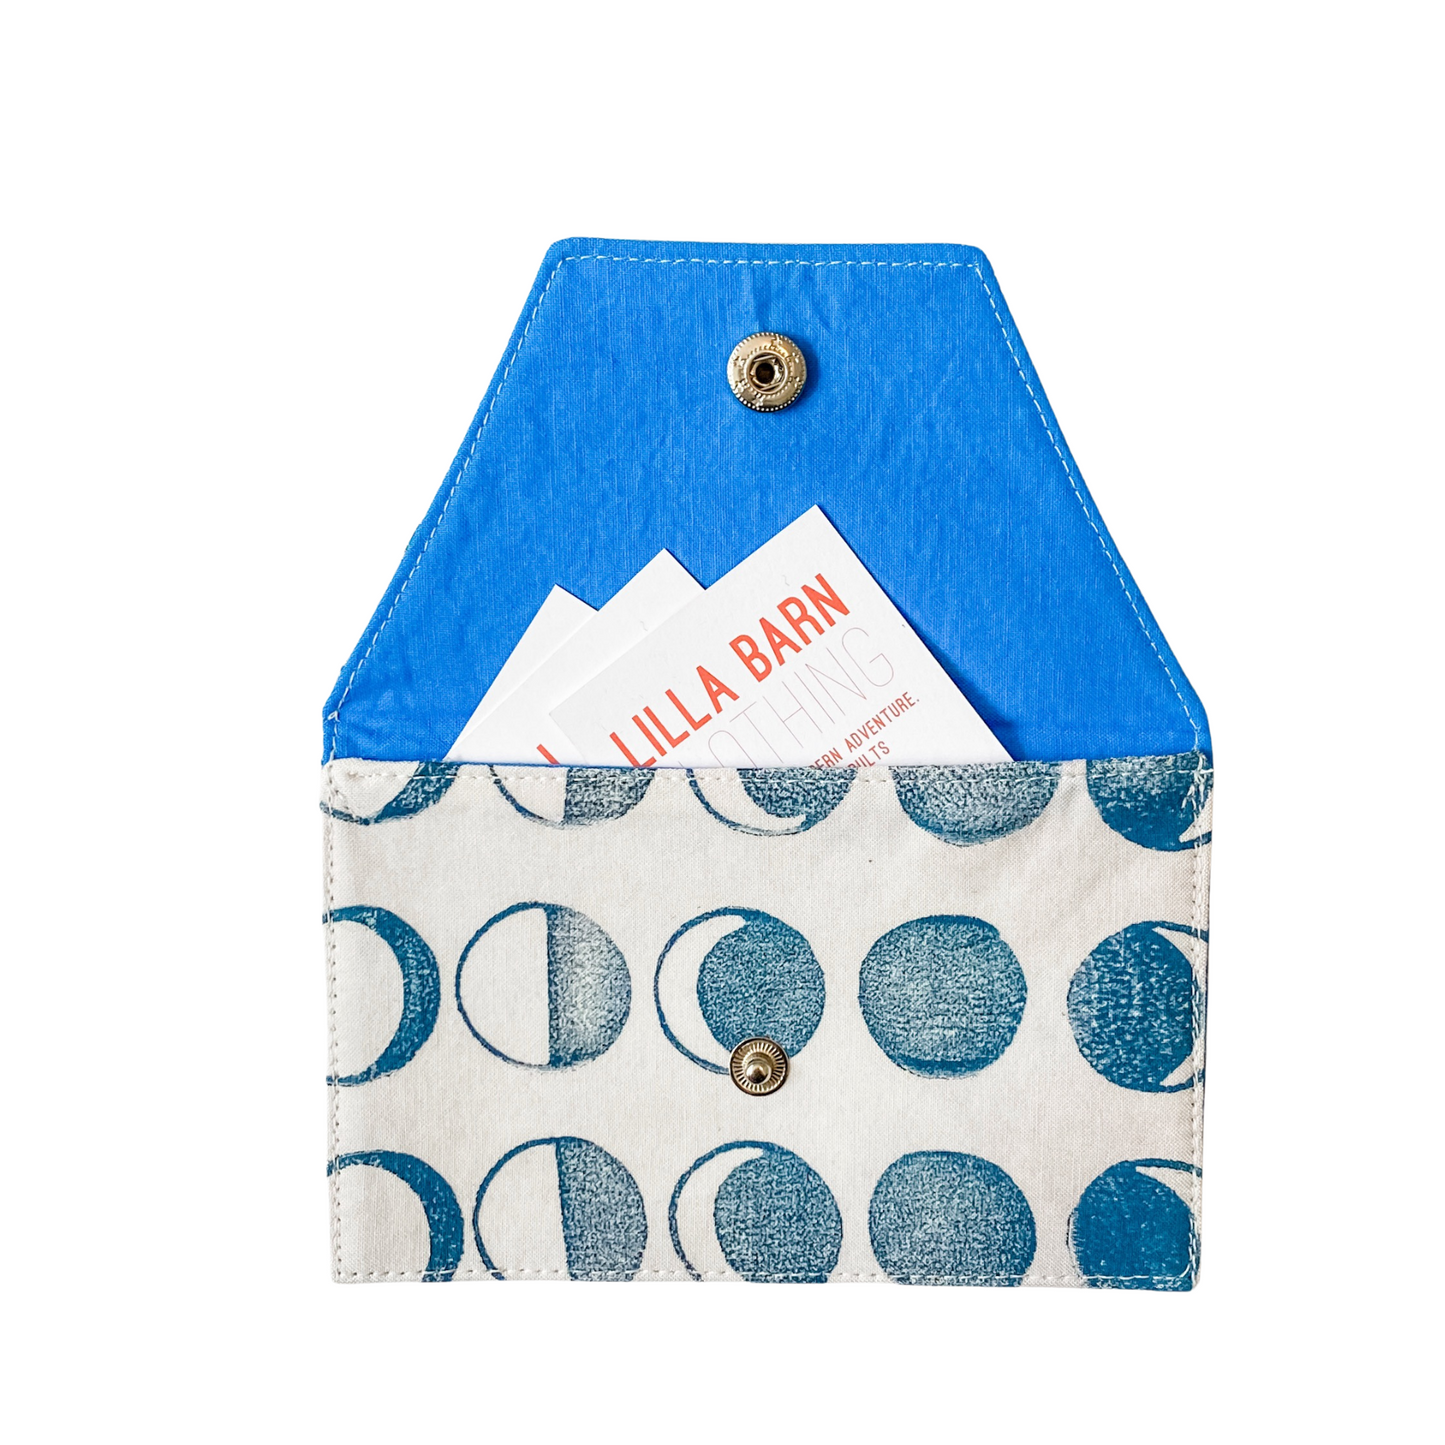 Mini Wallet - Blue Moon